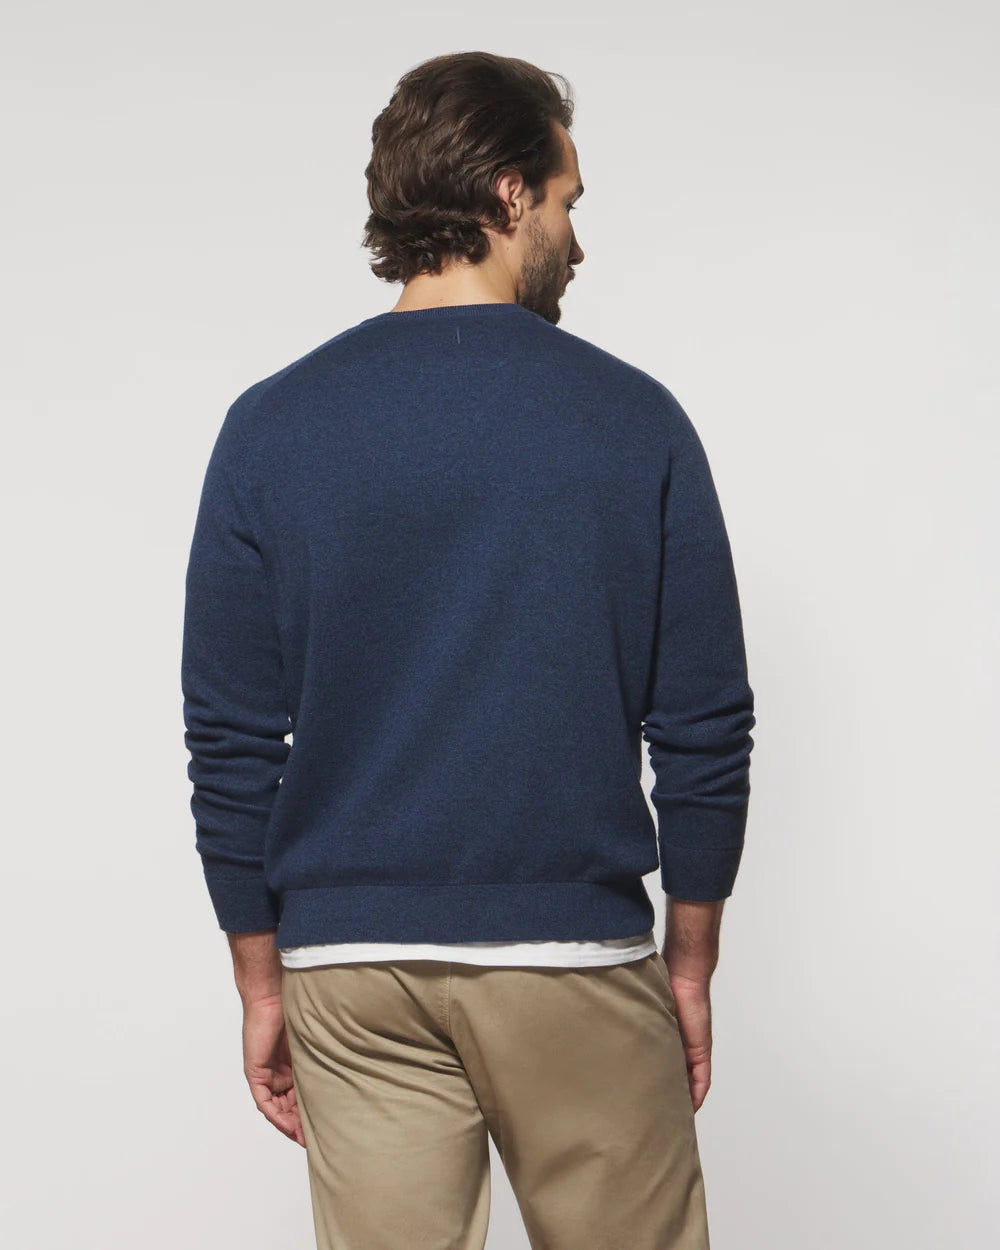 Medlin Cotton Blend Crewneck Sweater